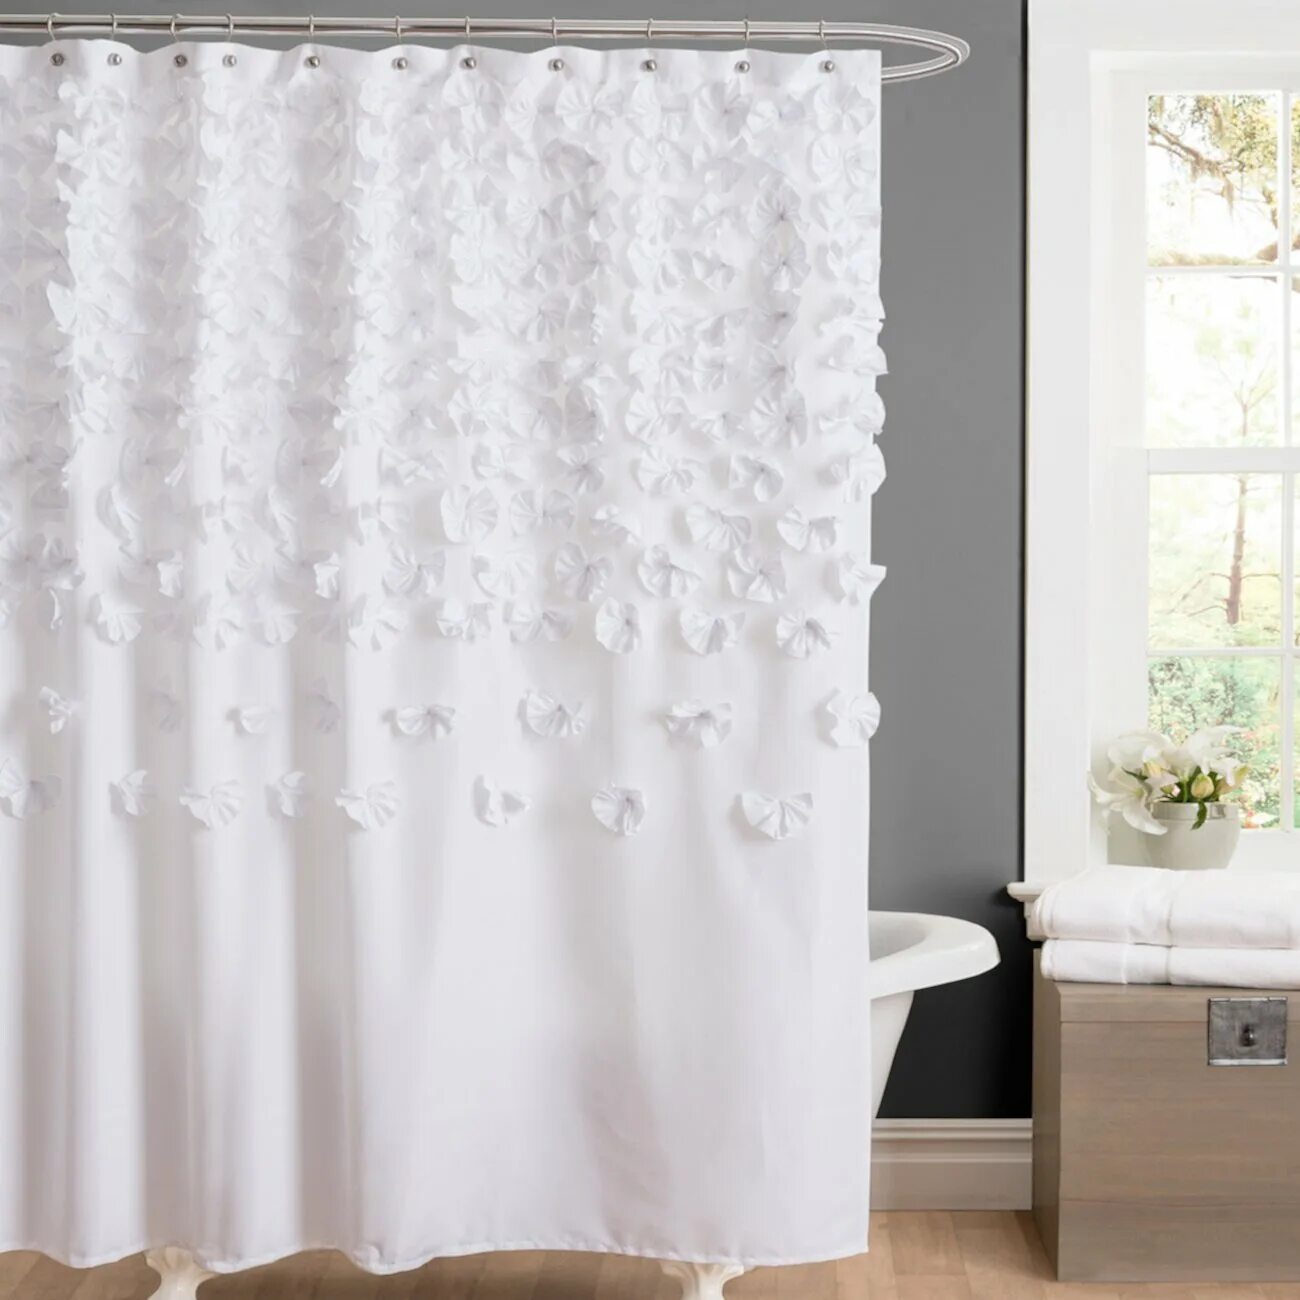 Штора для ванной Curtain MC-1804073. Штора Fabric Shower Curtain. Шторка для душа Shower Curtain f-b20y. Шторка для ванной d24p218i11. White shower